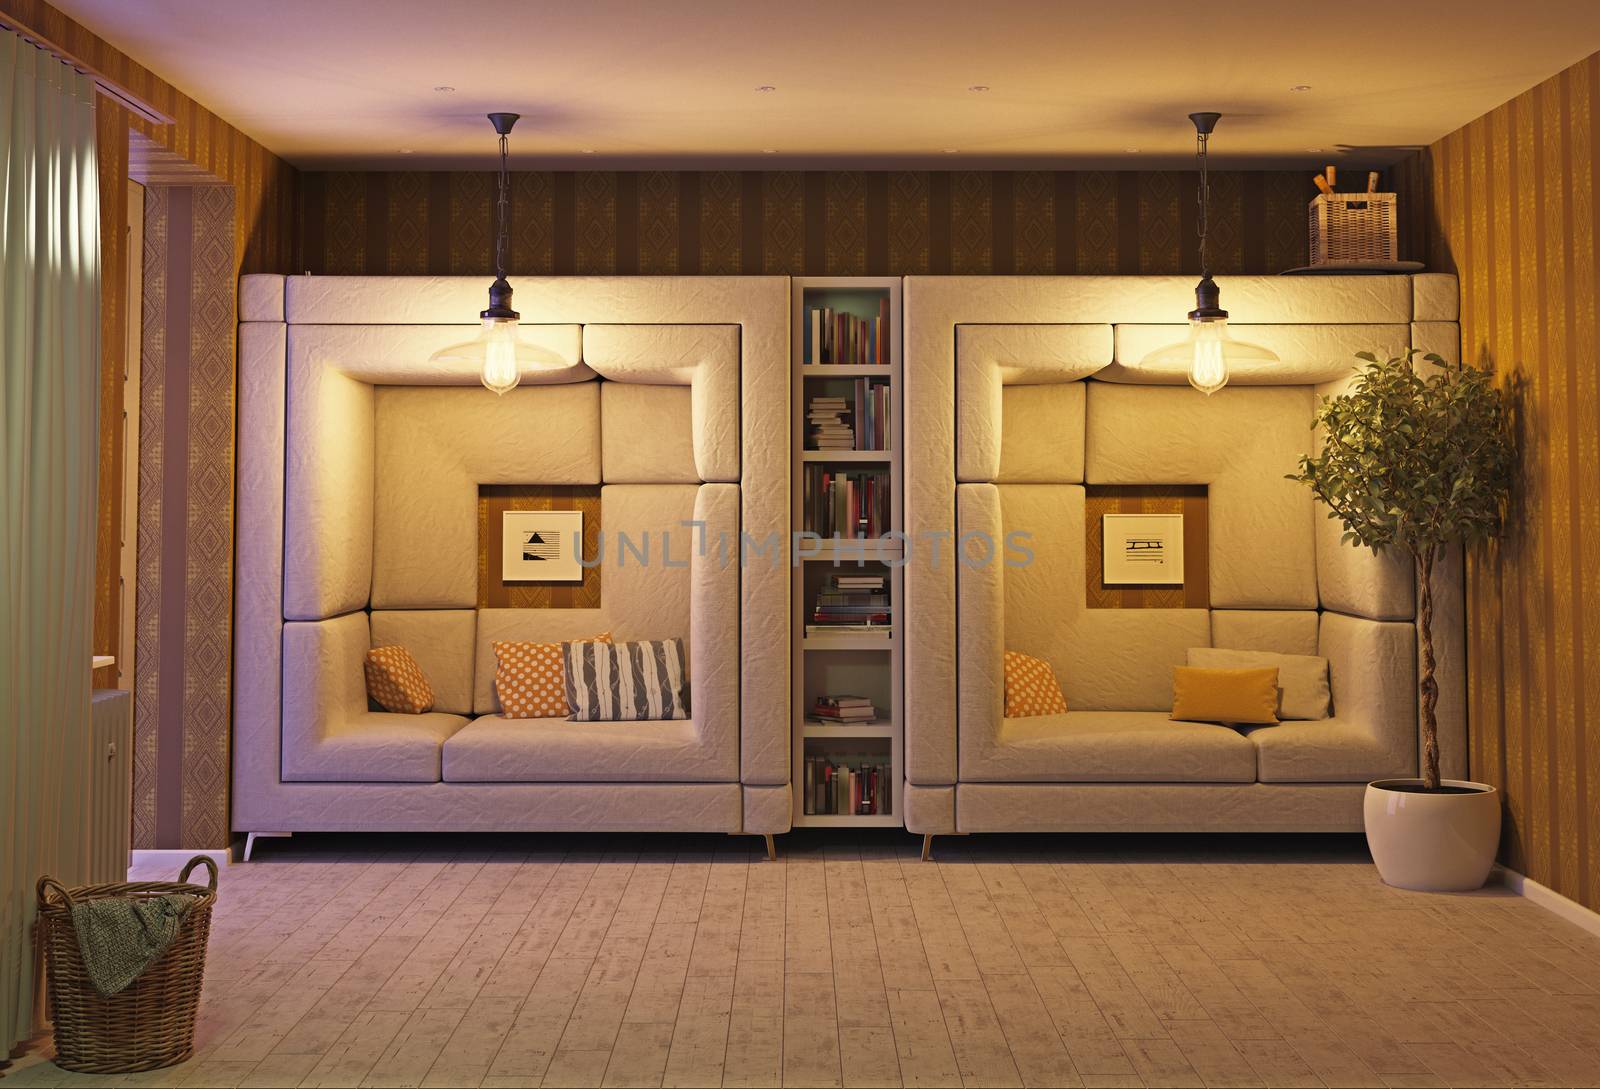 modern design living room interior. 3d design concept